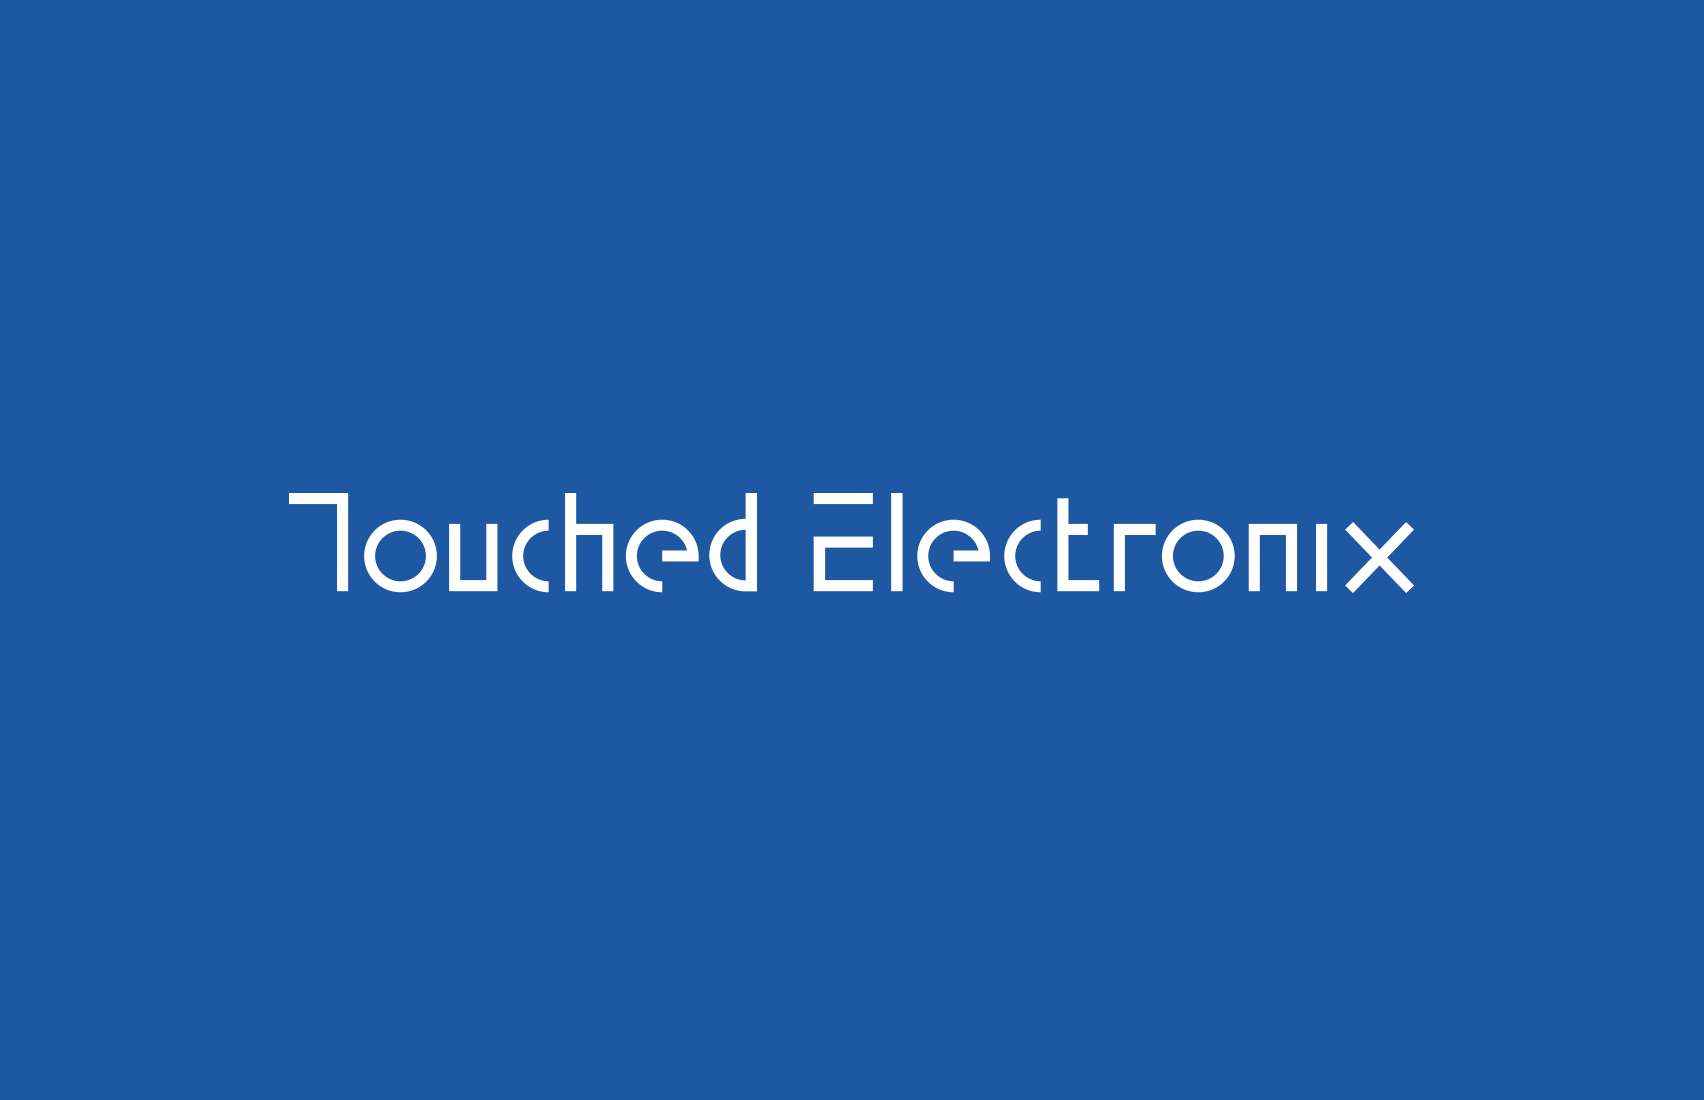 Touched Electronix wordmark